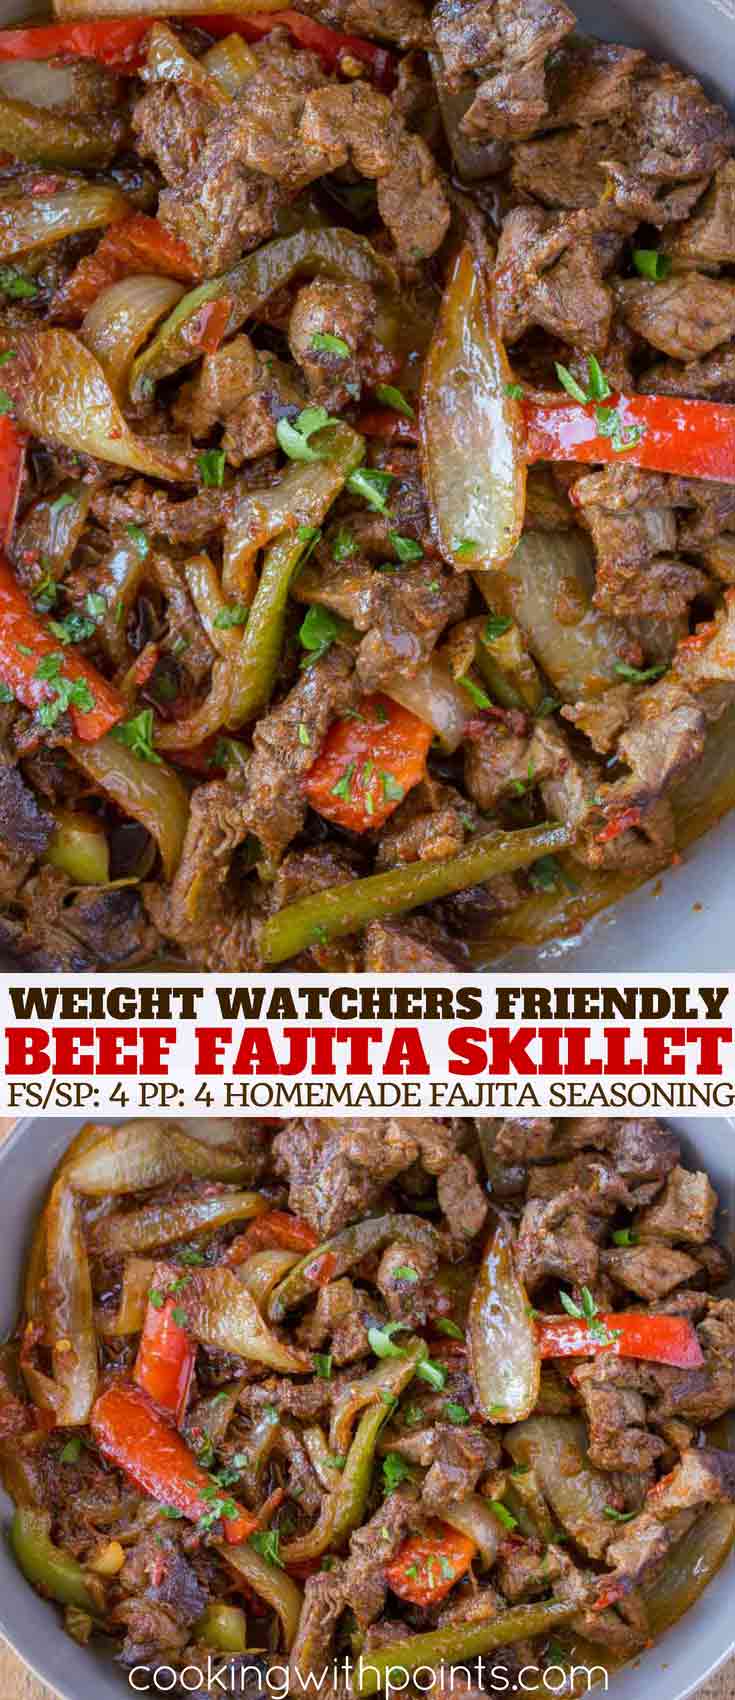 Beef Fajita Skillet - Cooking Made Healthy